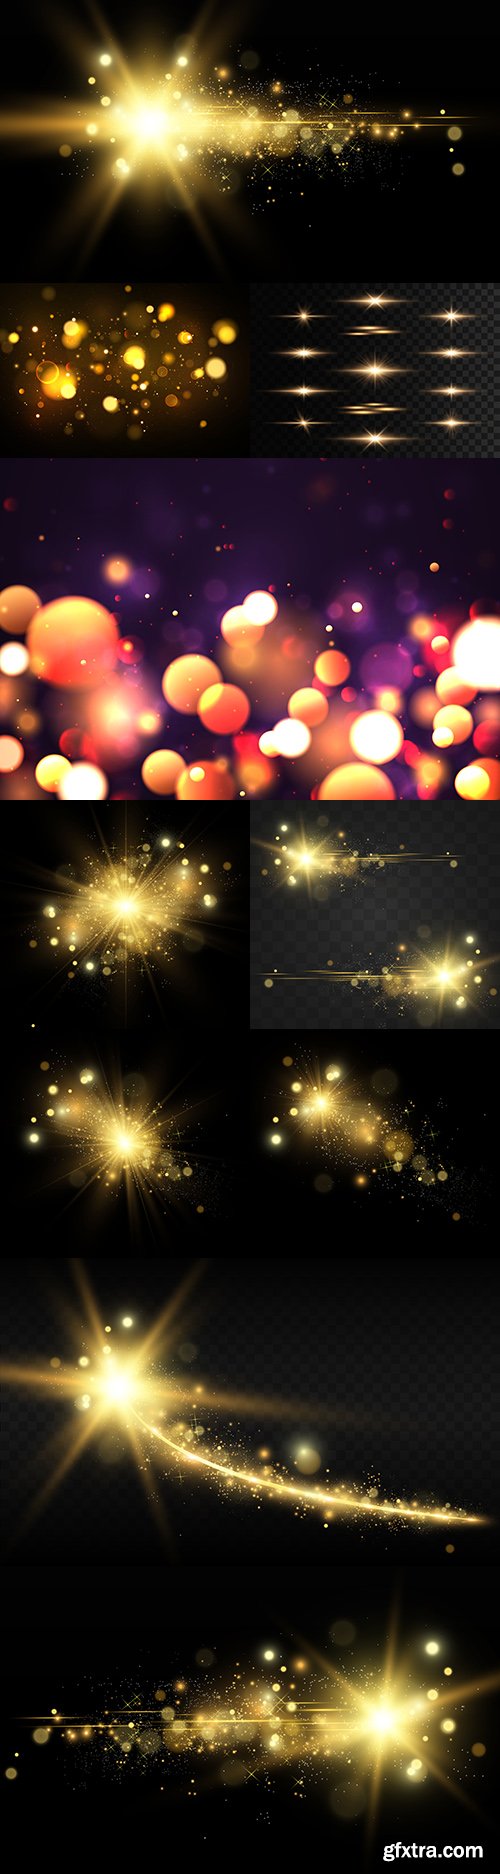 Golden bright star light effect design illustration
